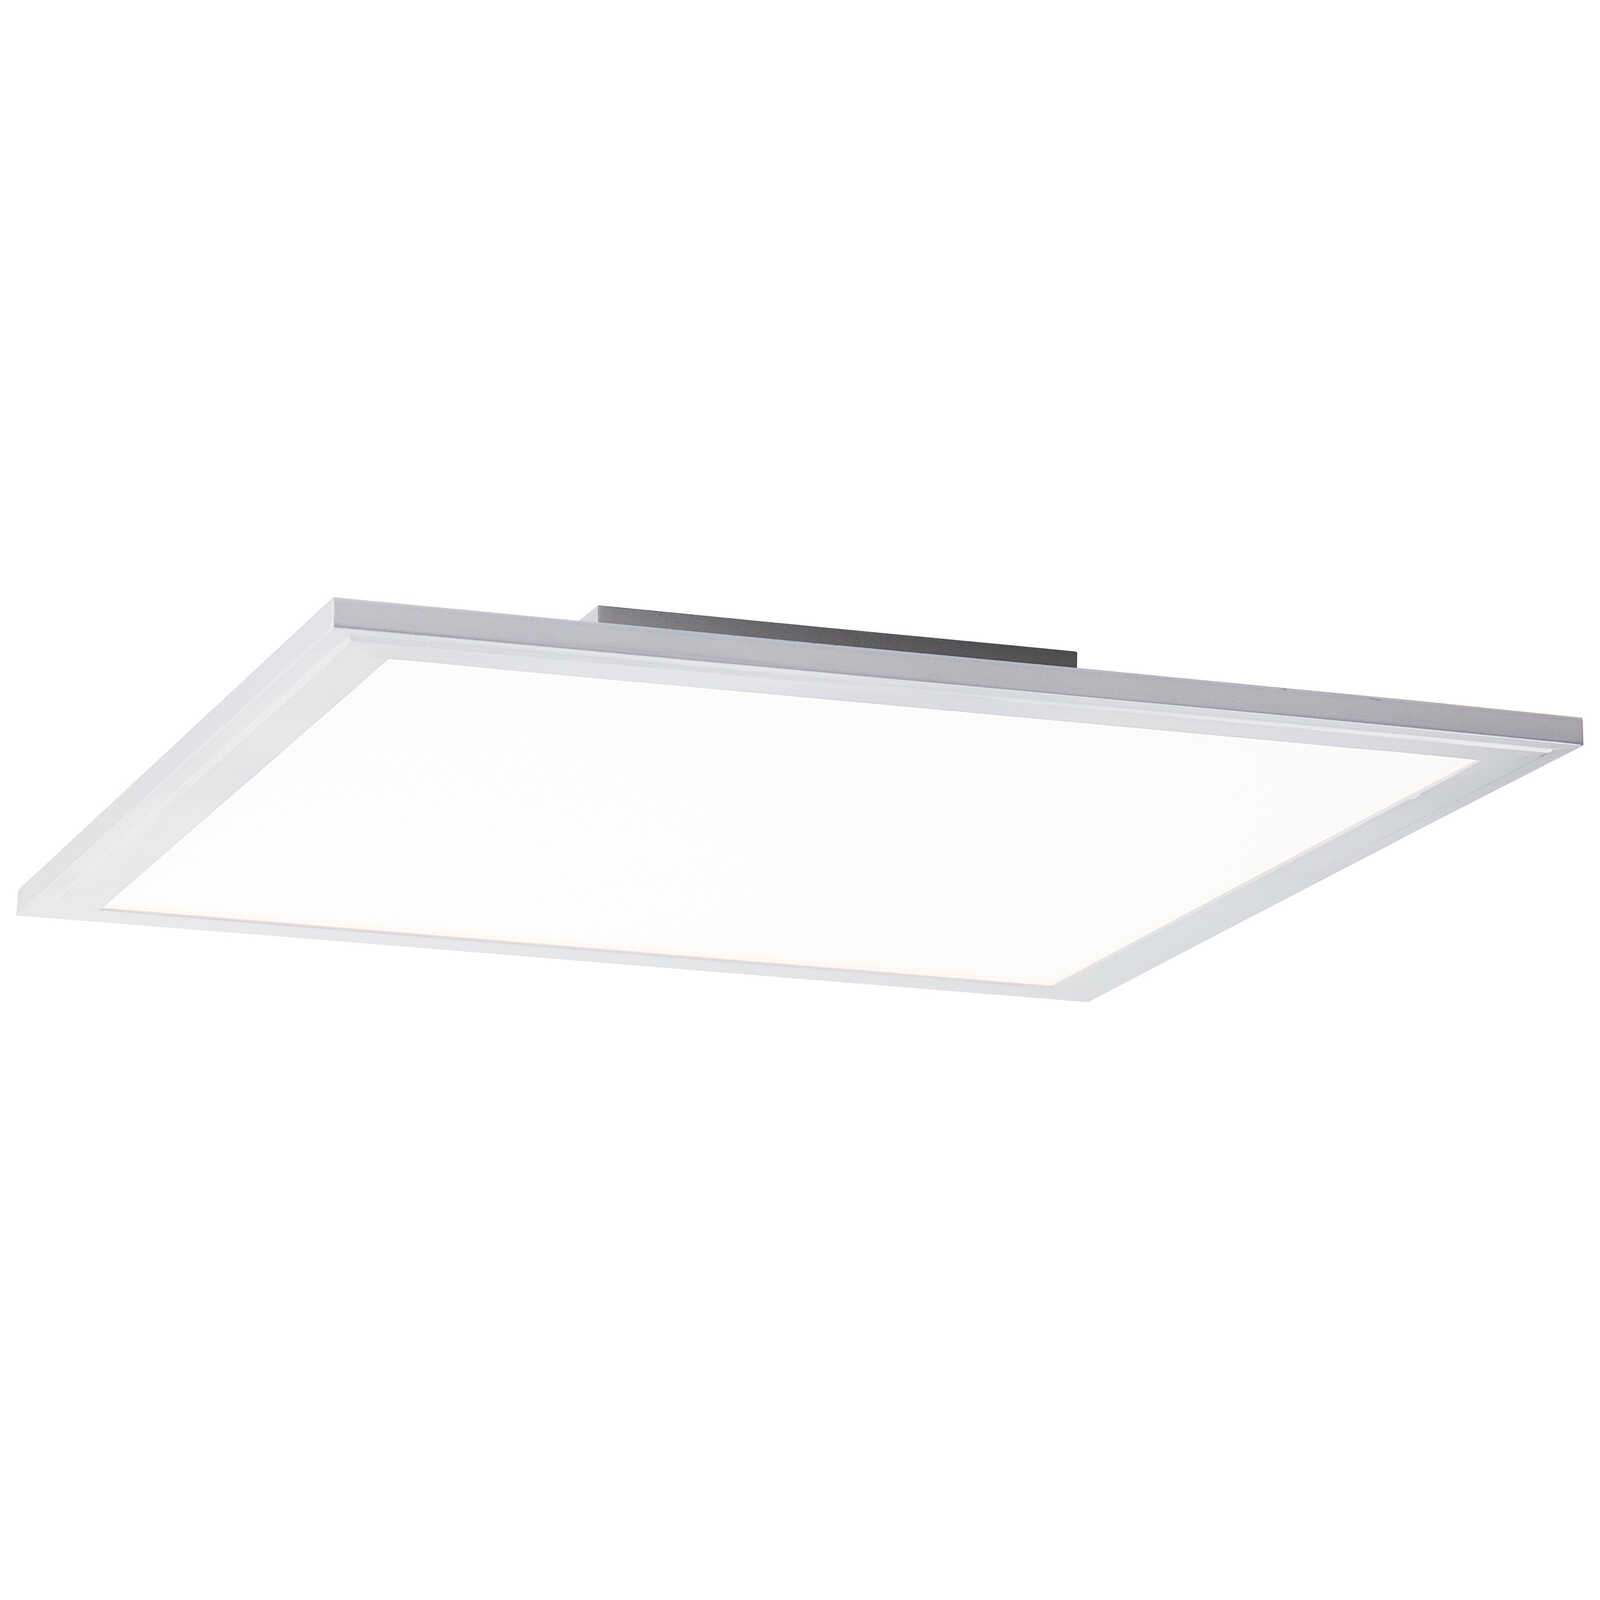             Plastic ceiling light - Gloria 1 - Silver
        